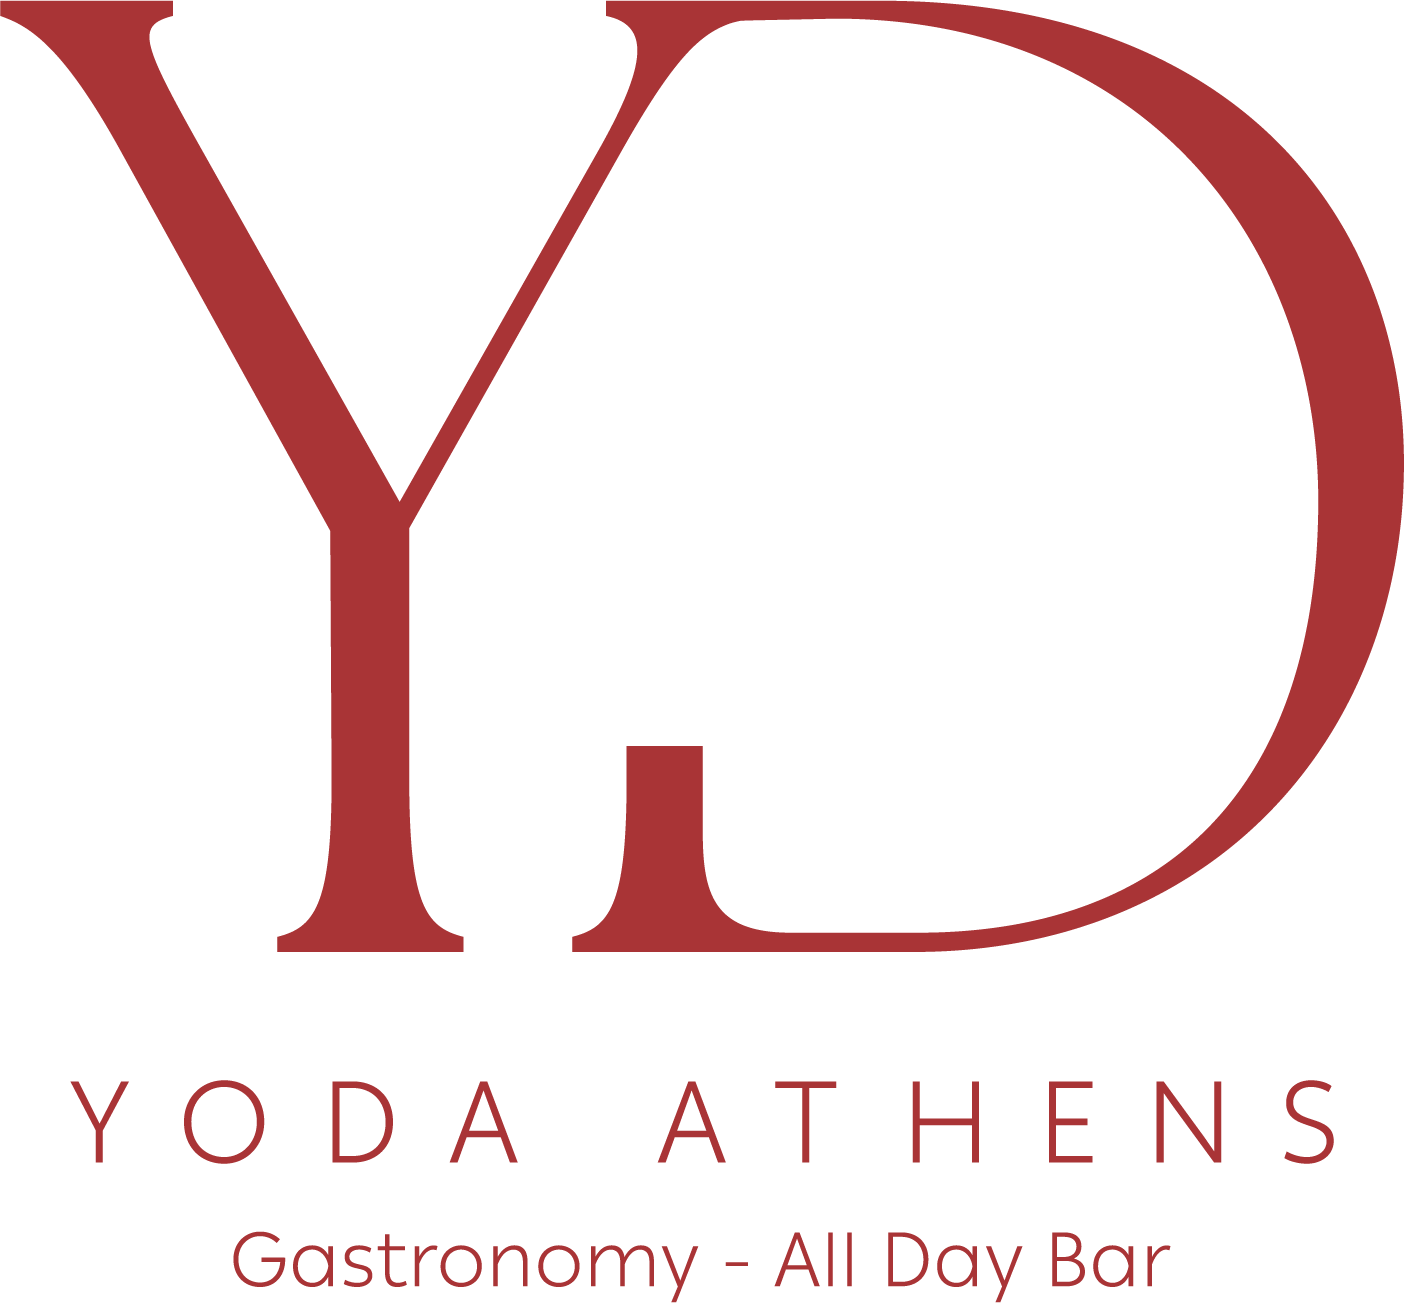 Yoda Athens